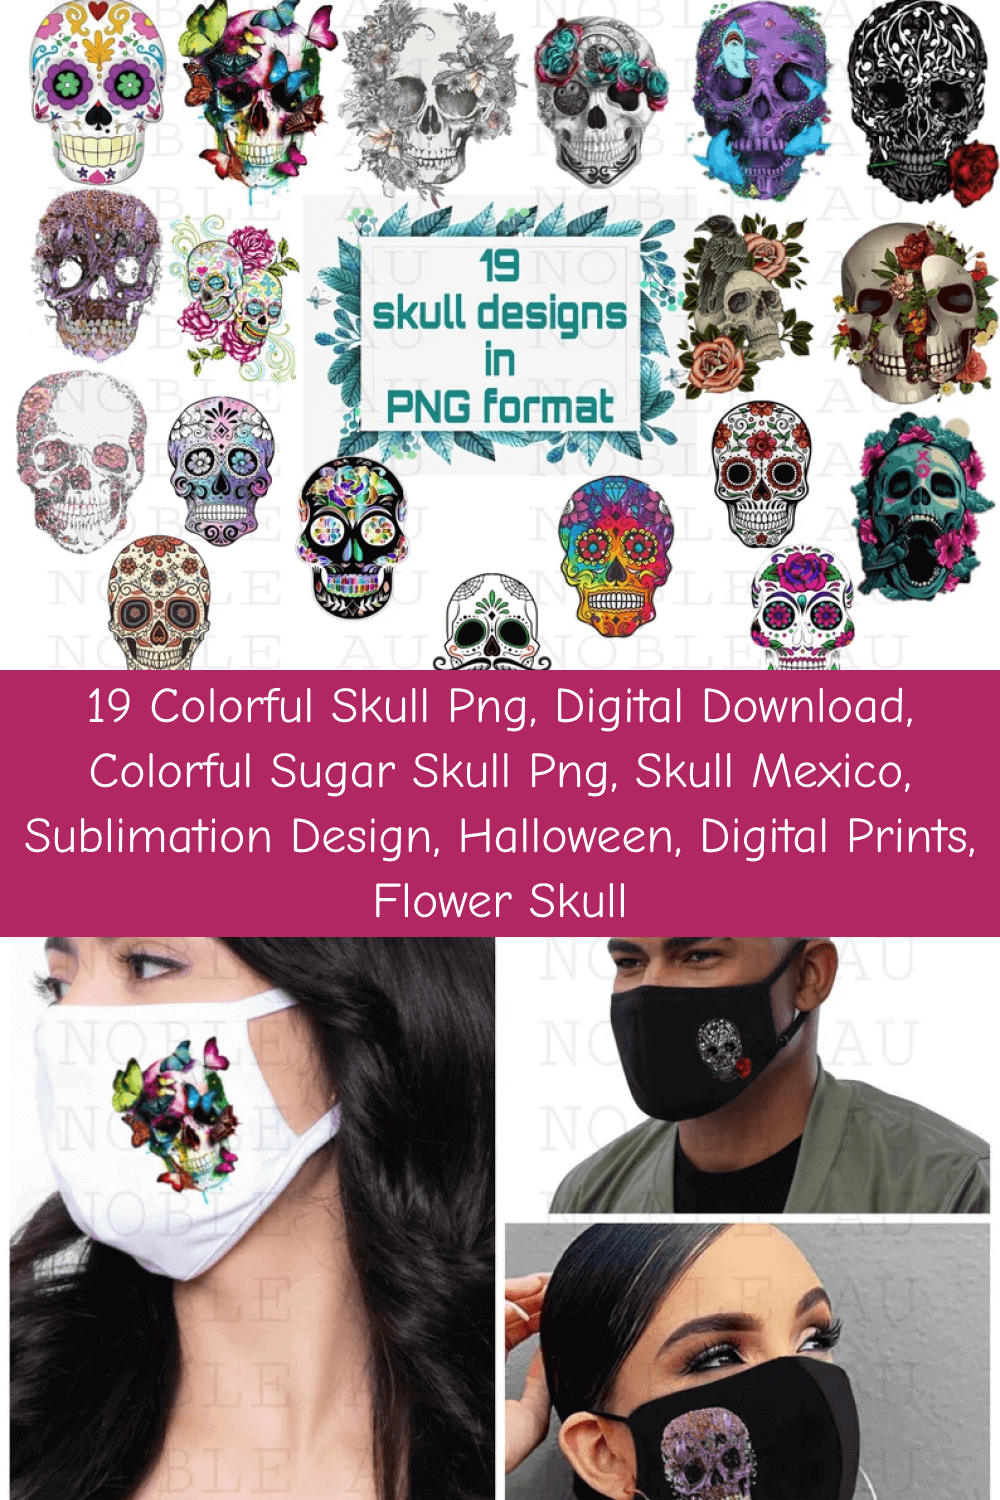 Sublimation Design, Halloween, Digital Prints, Flower Skull.